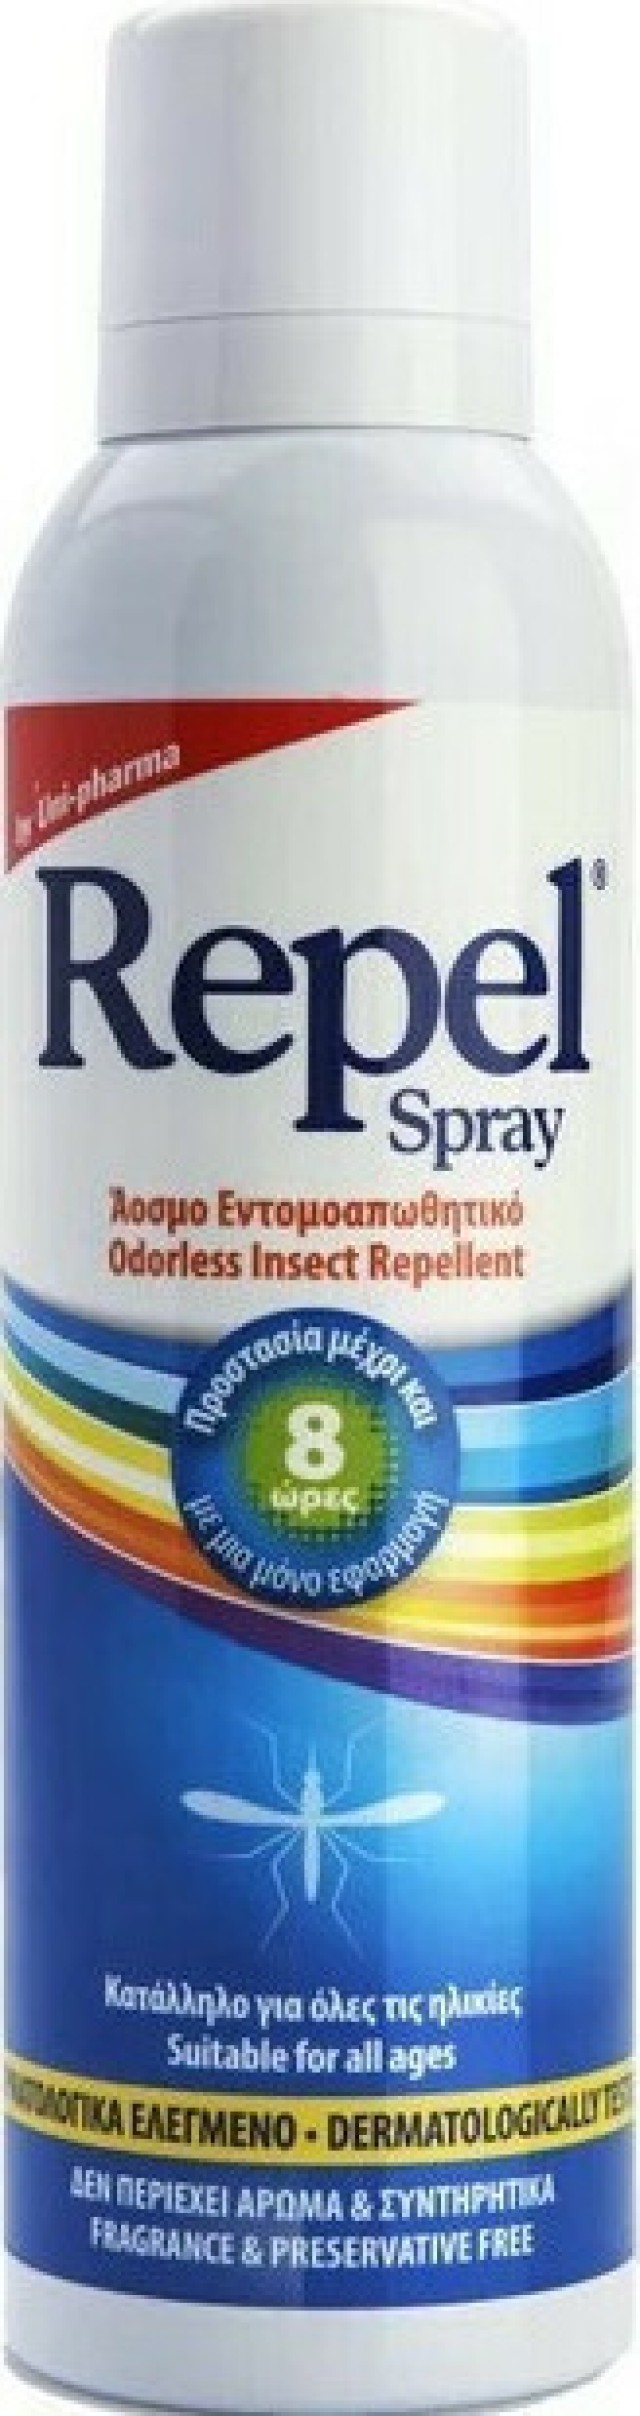 UniPharma Repel Spray Άοσμο Εντομοαπωθητικό Με Υαλουρονικό Για 8ωρη Προστασία Για Όλη Την Οικογένεια,150ml